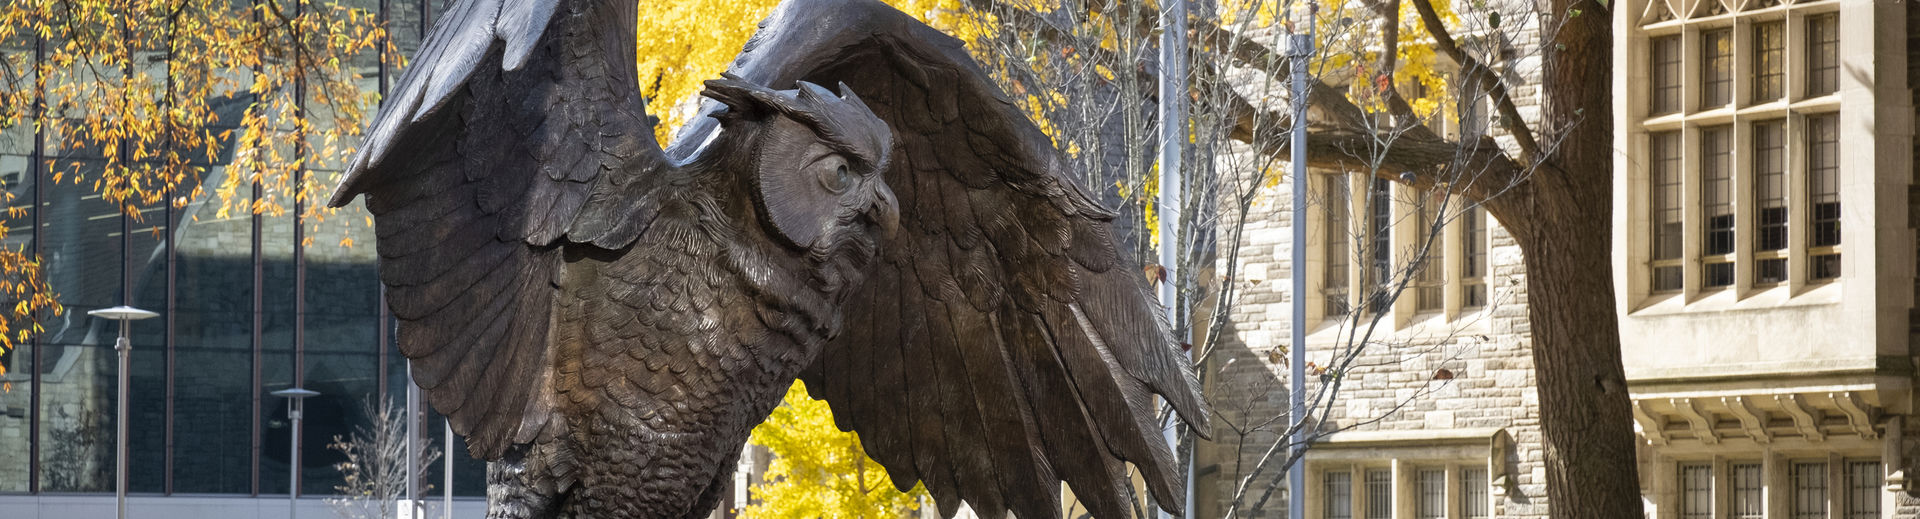 Owl statue on campus